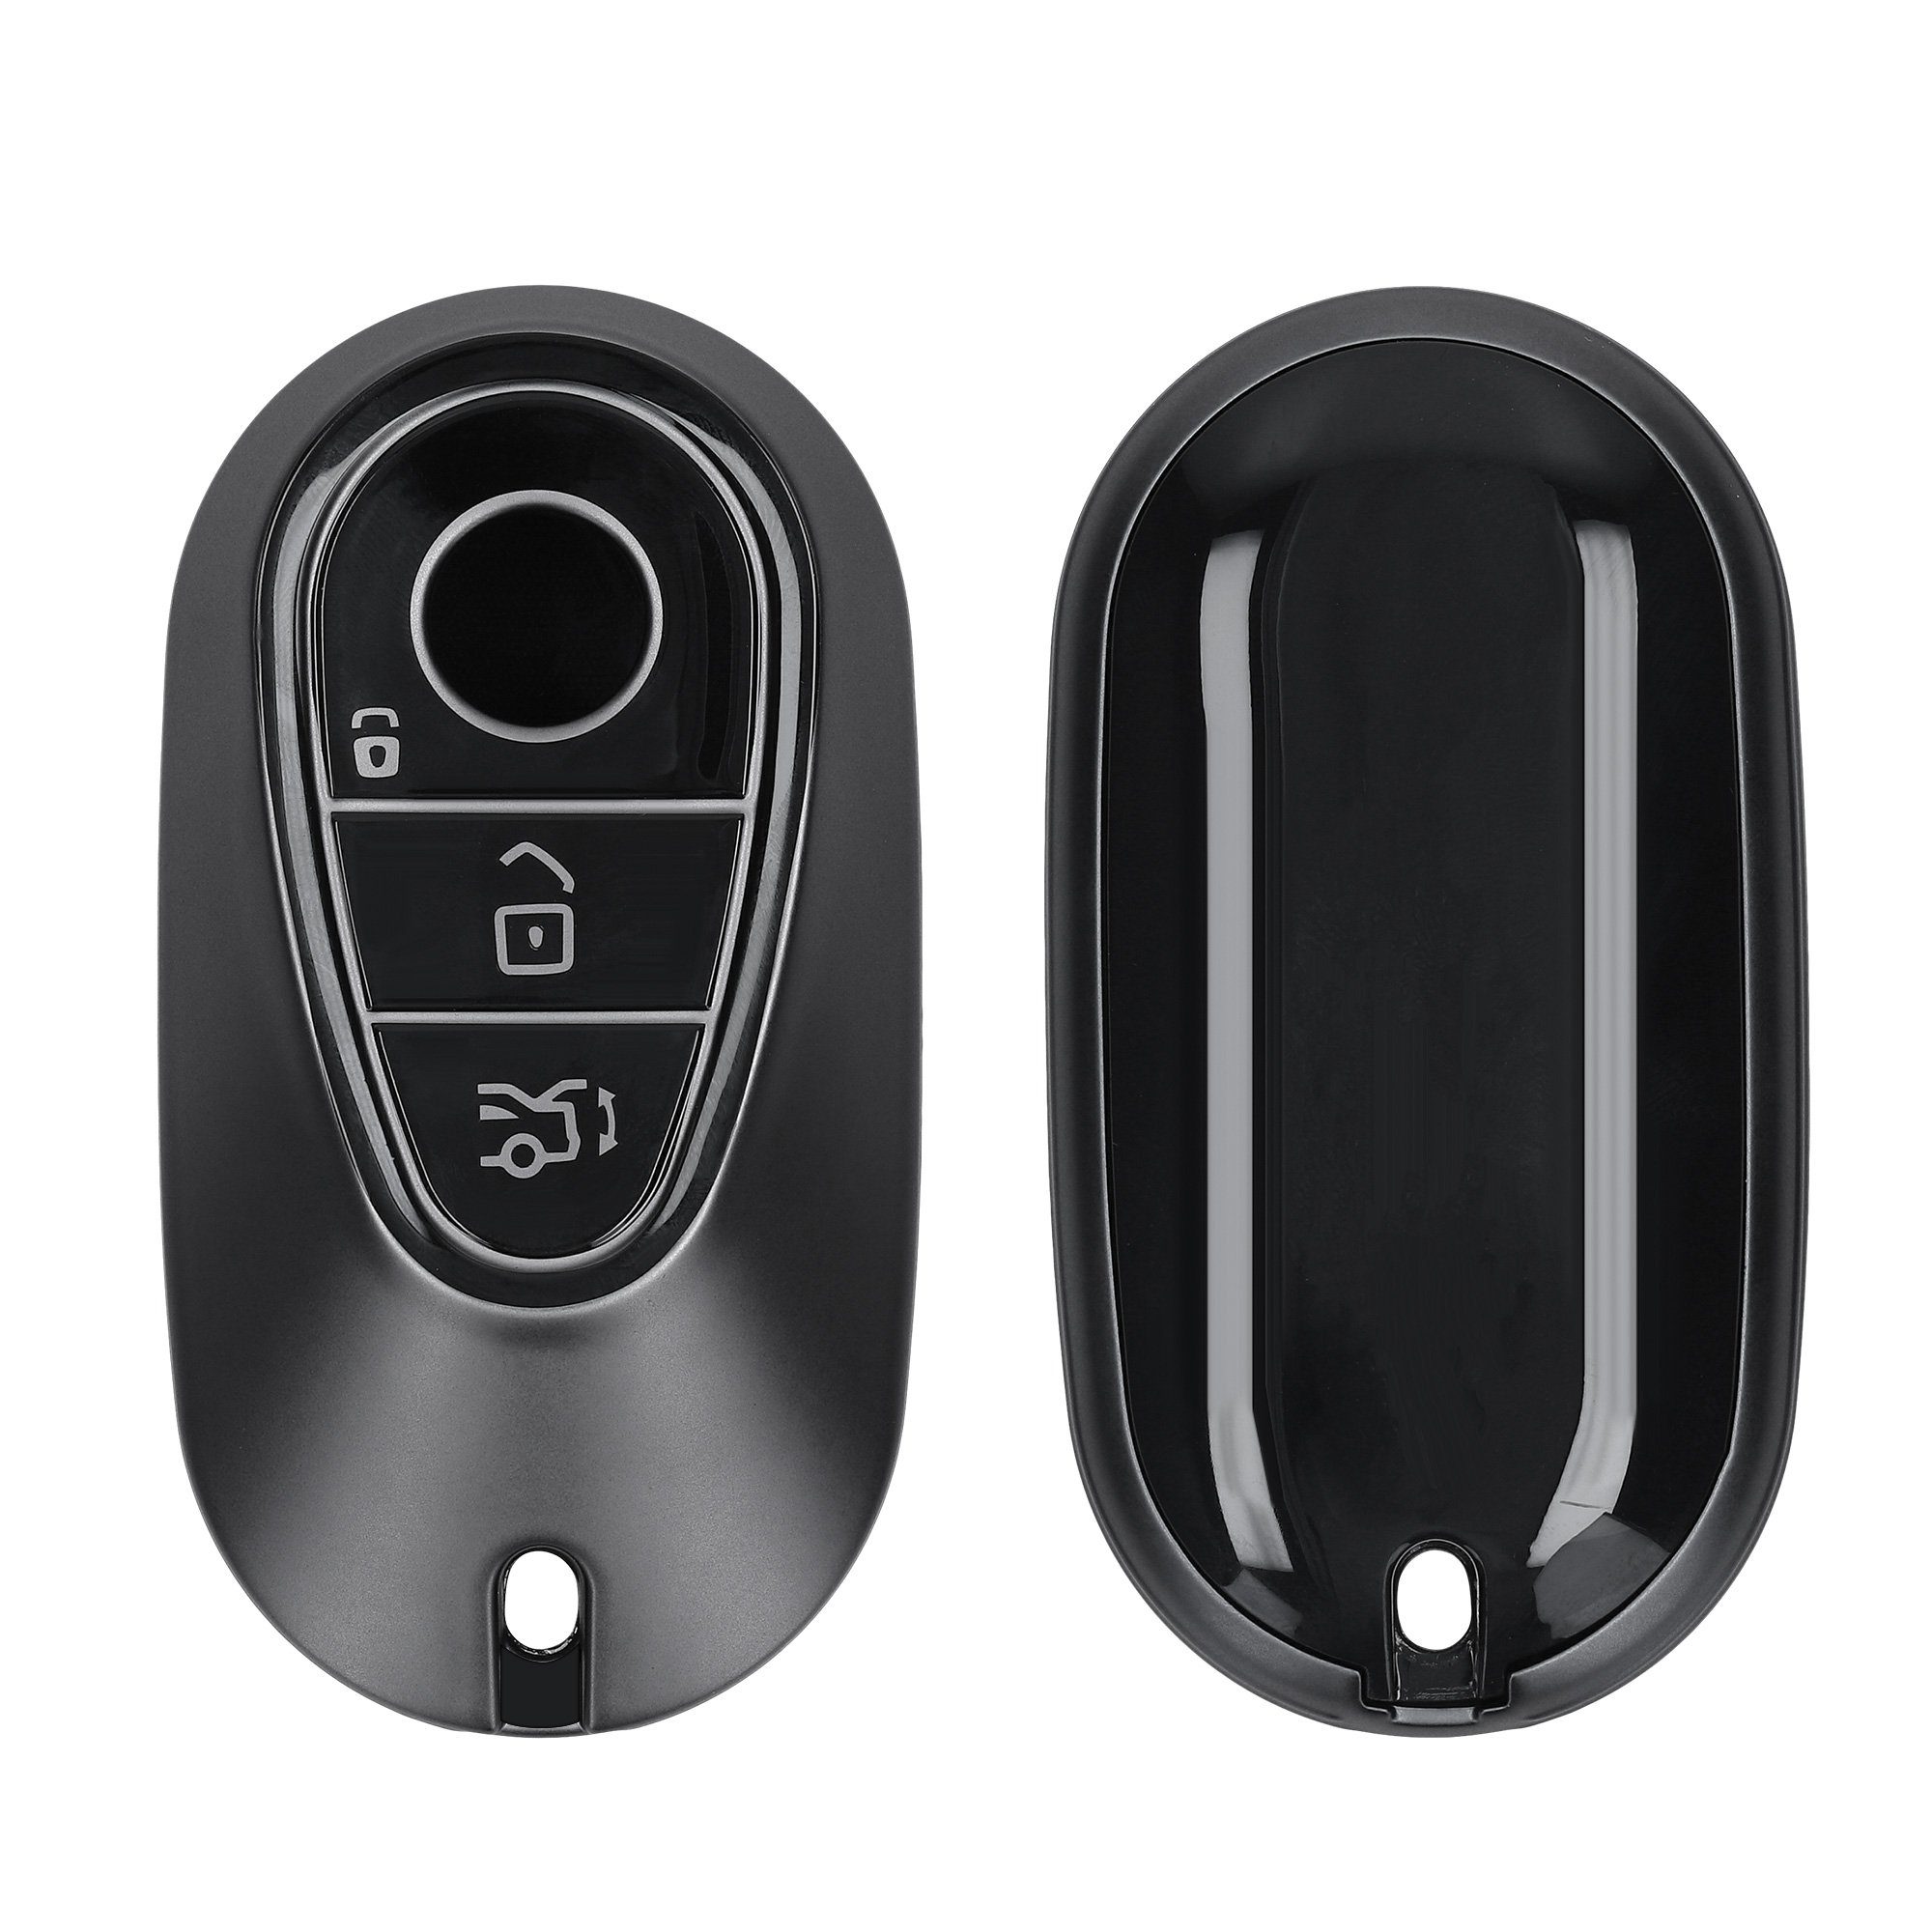 Autoschlüssel Hülle: Schlüsselhülle Cover, TPU Autoschlüssel Hülle, 4  Tasten Autoschlüssel Hülle Kompatibel mit Renault, Schlüsselhülle,  Schlüssel